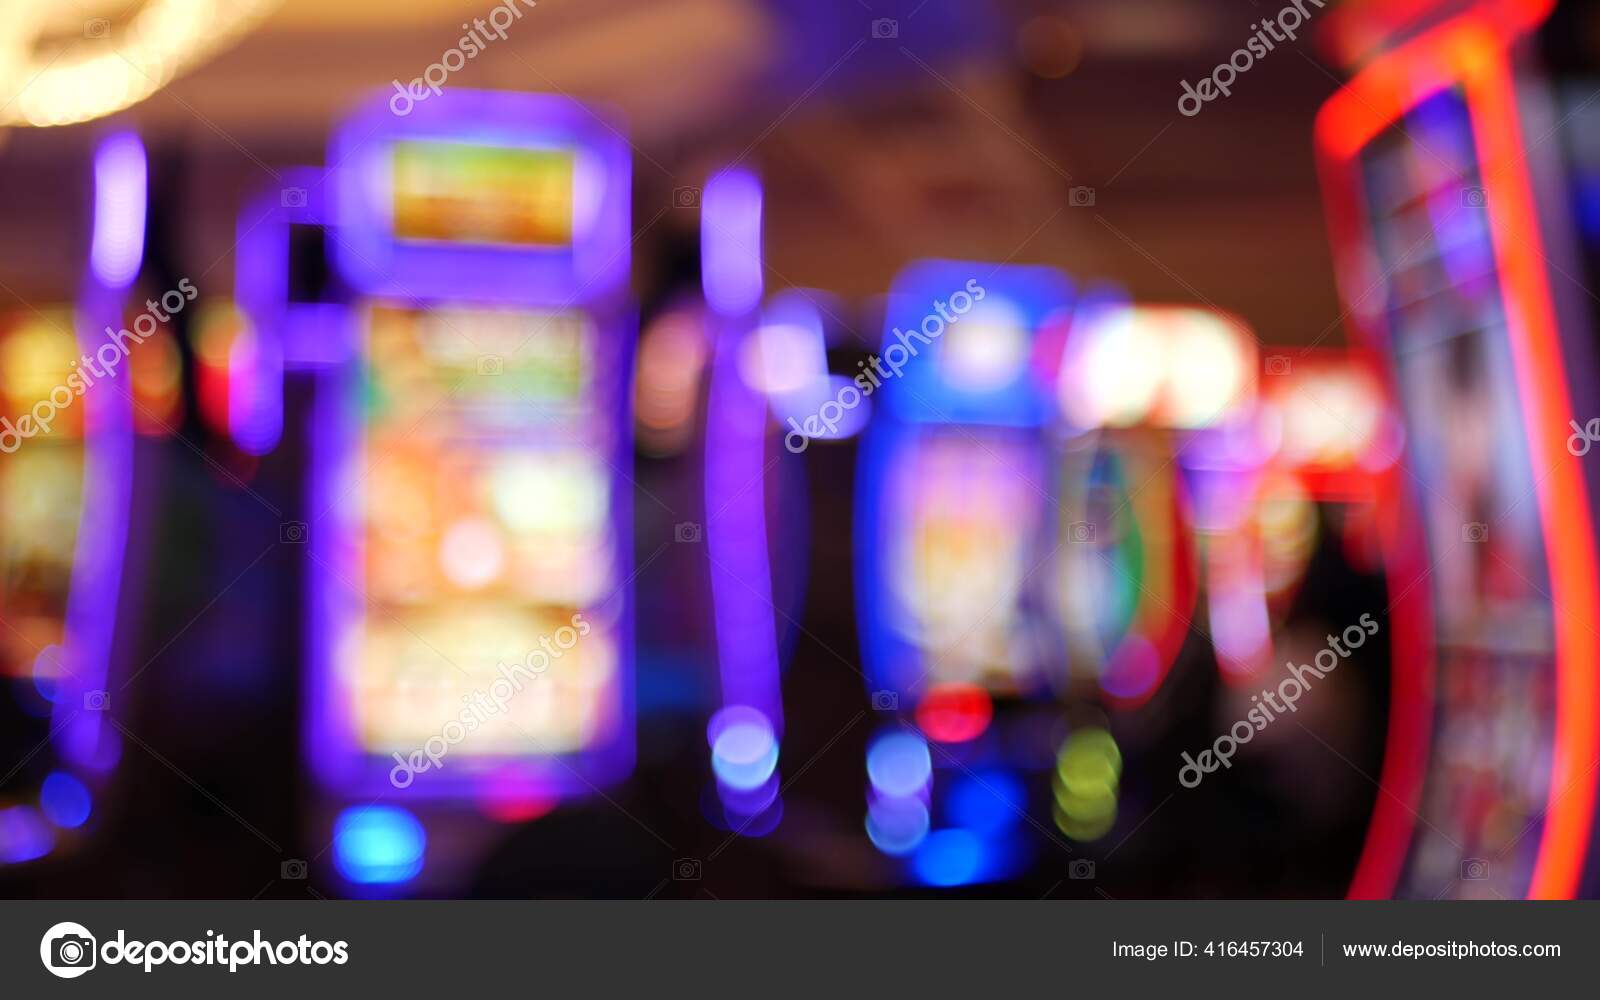 Fruit machine casino slots slot hi-res stock photography and